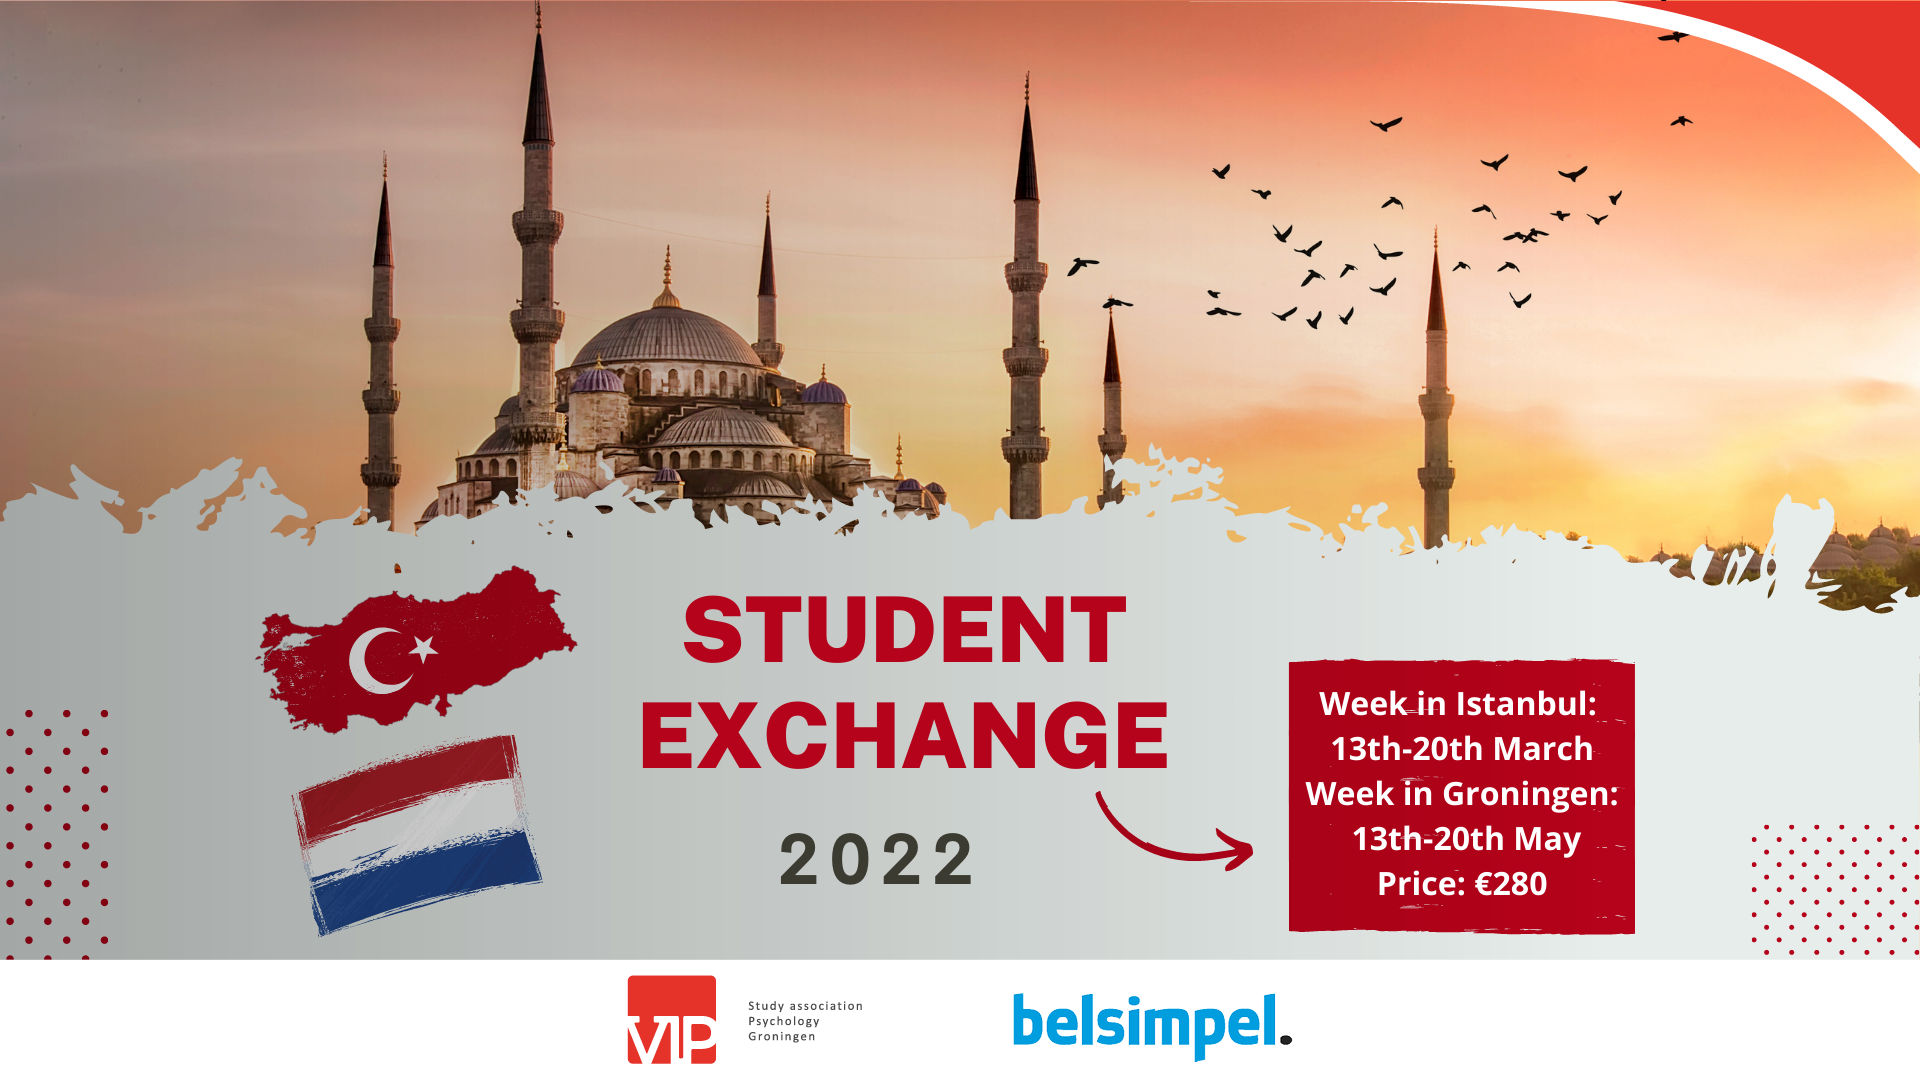 VIP: Student Exchange